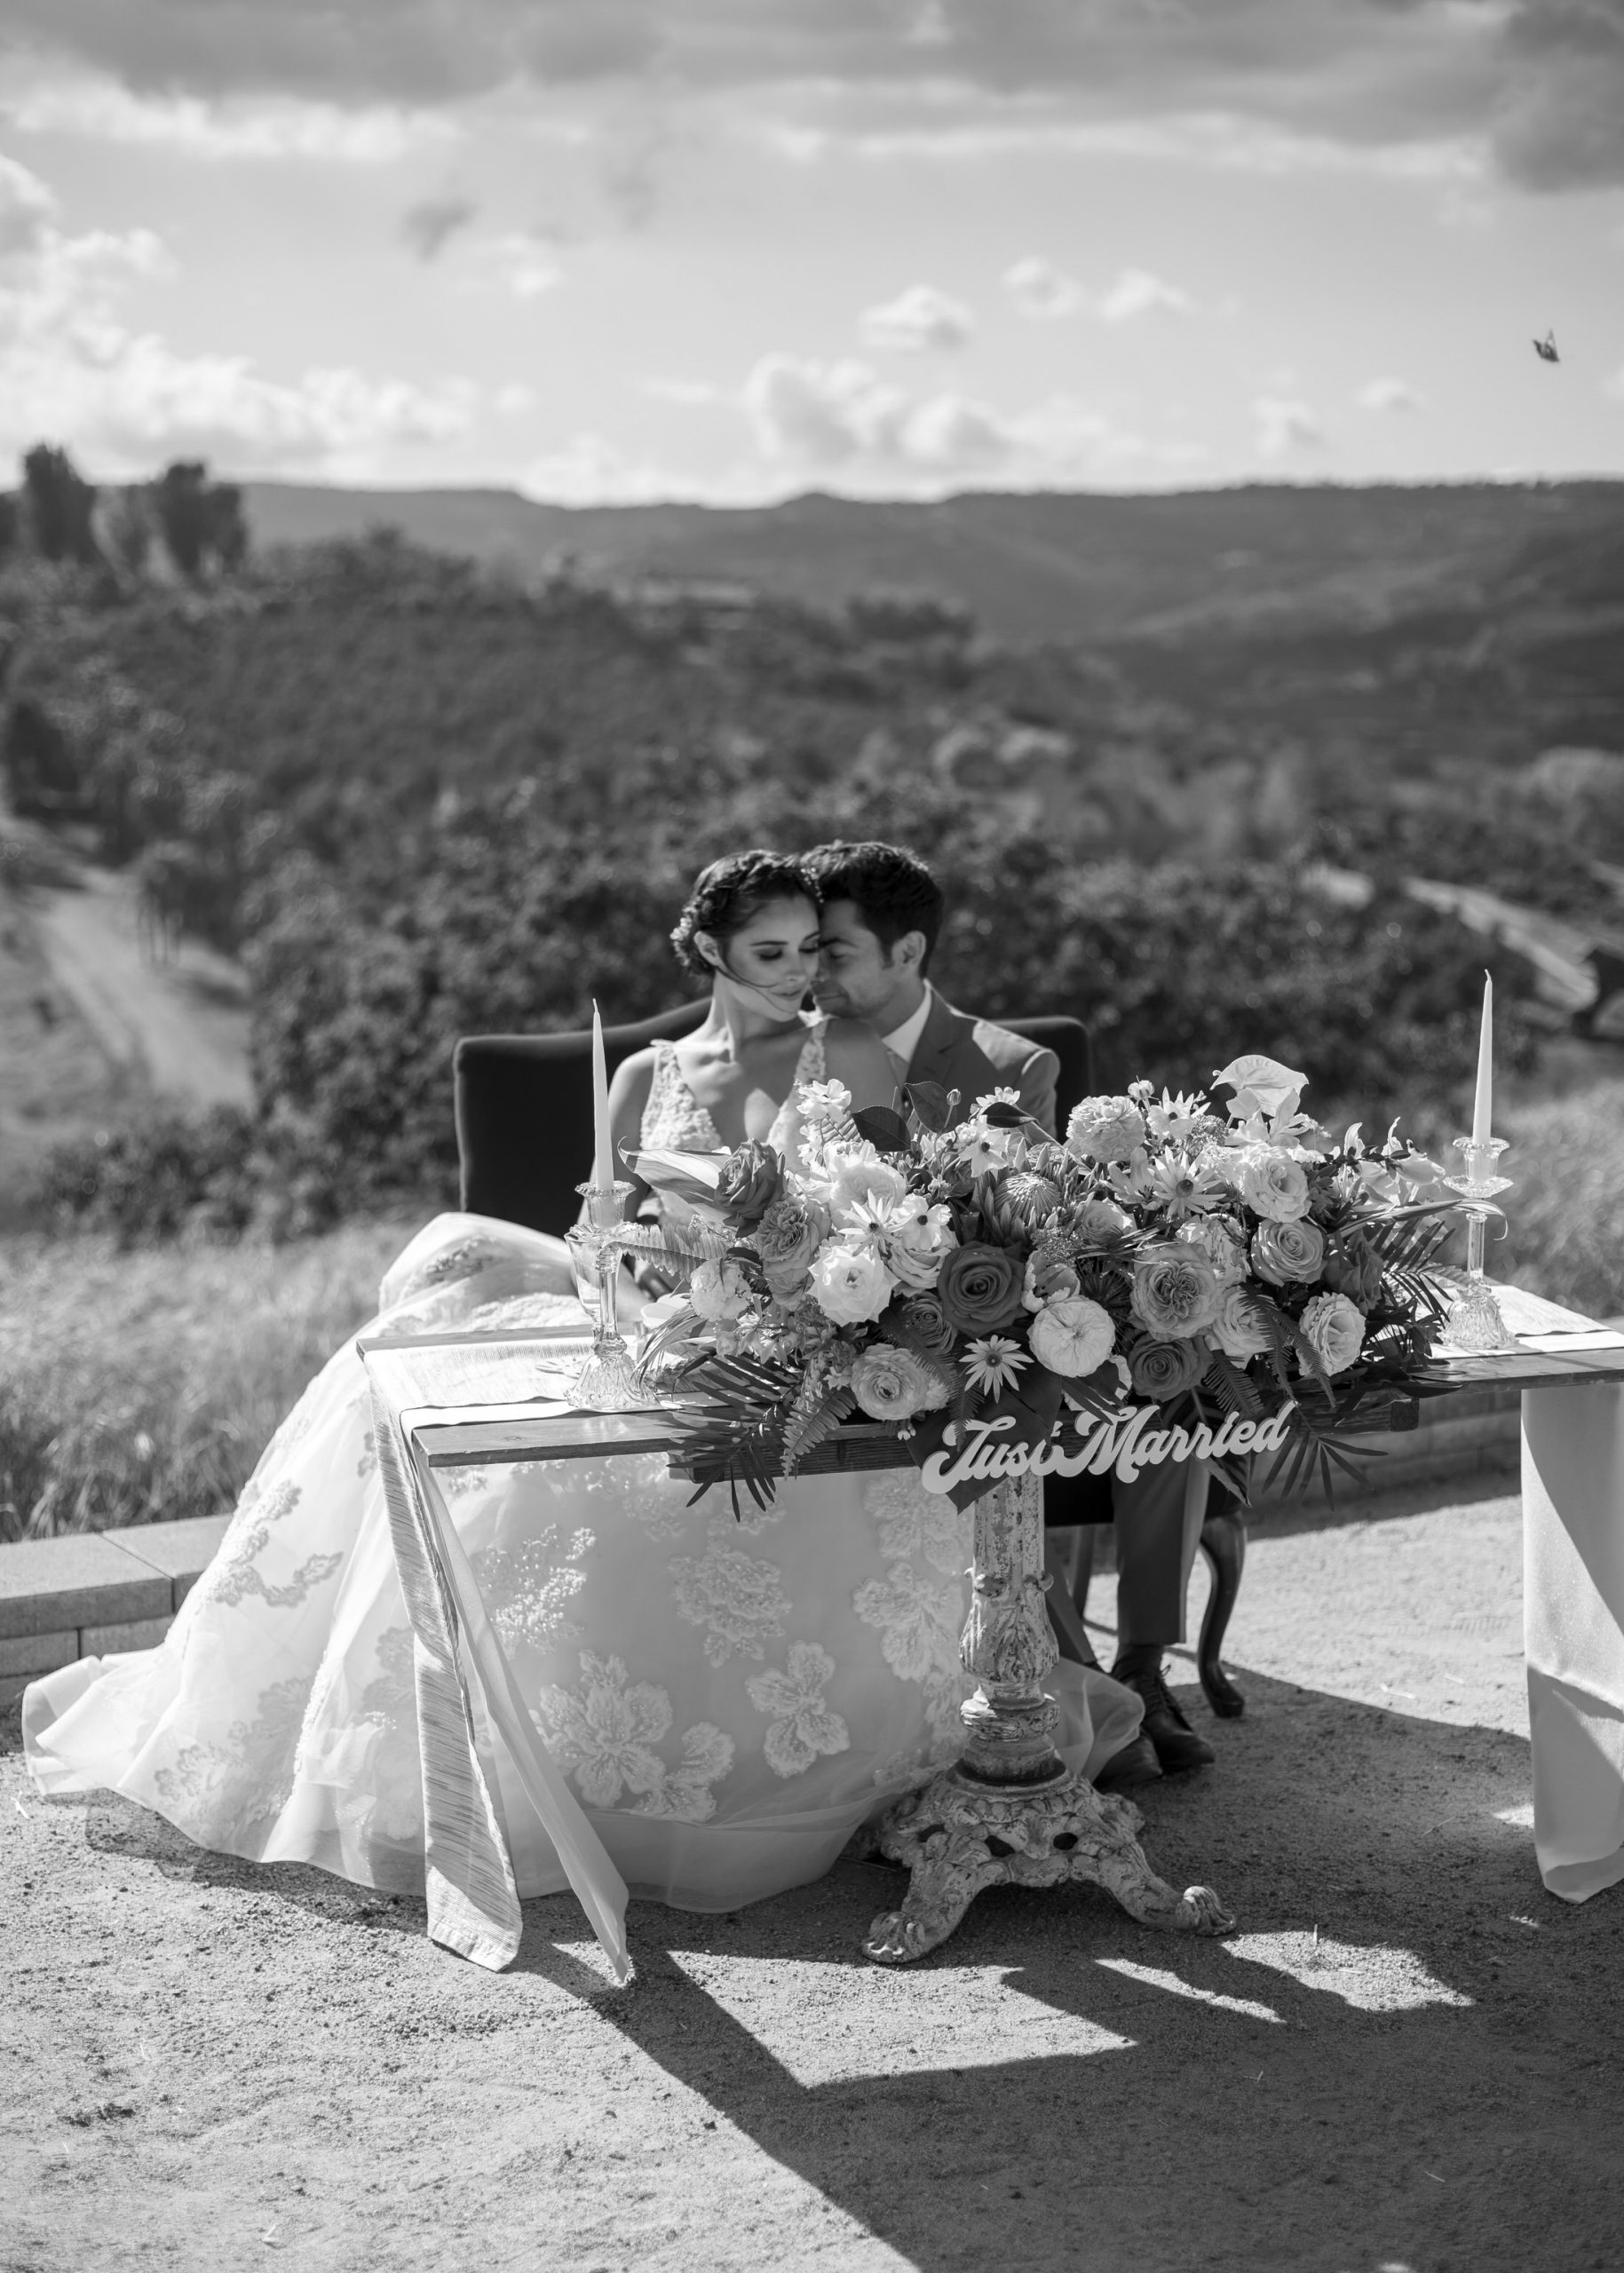 Bridal portraits at a tropical wedding in Temecula, CA.